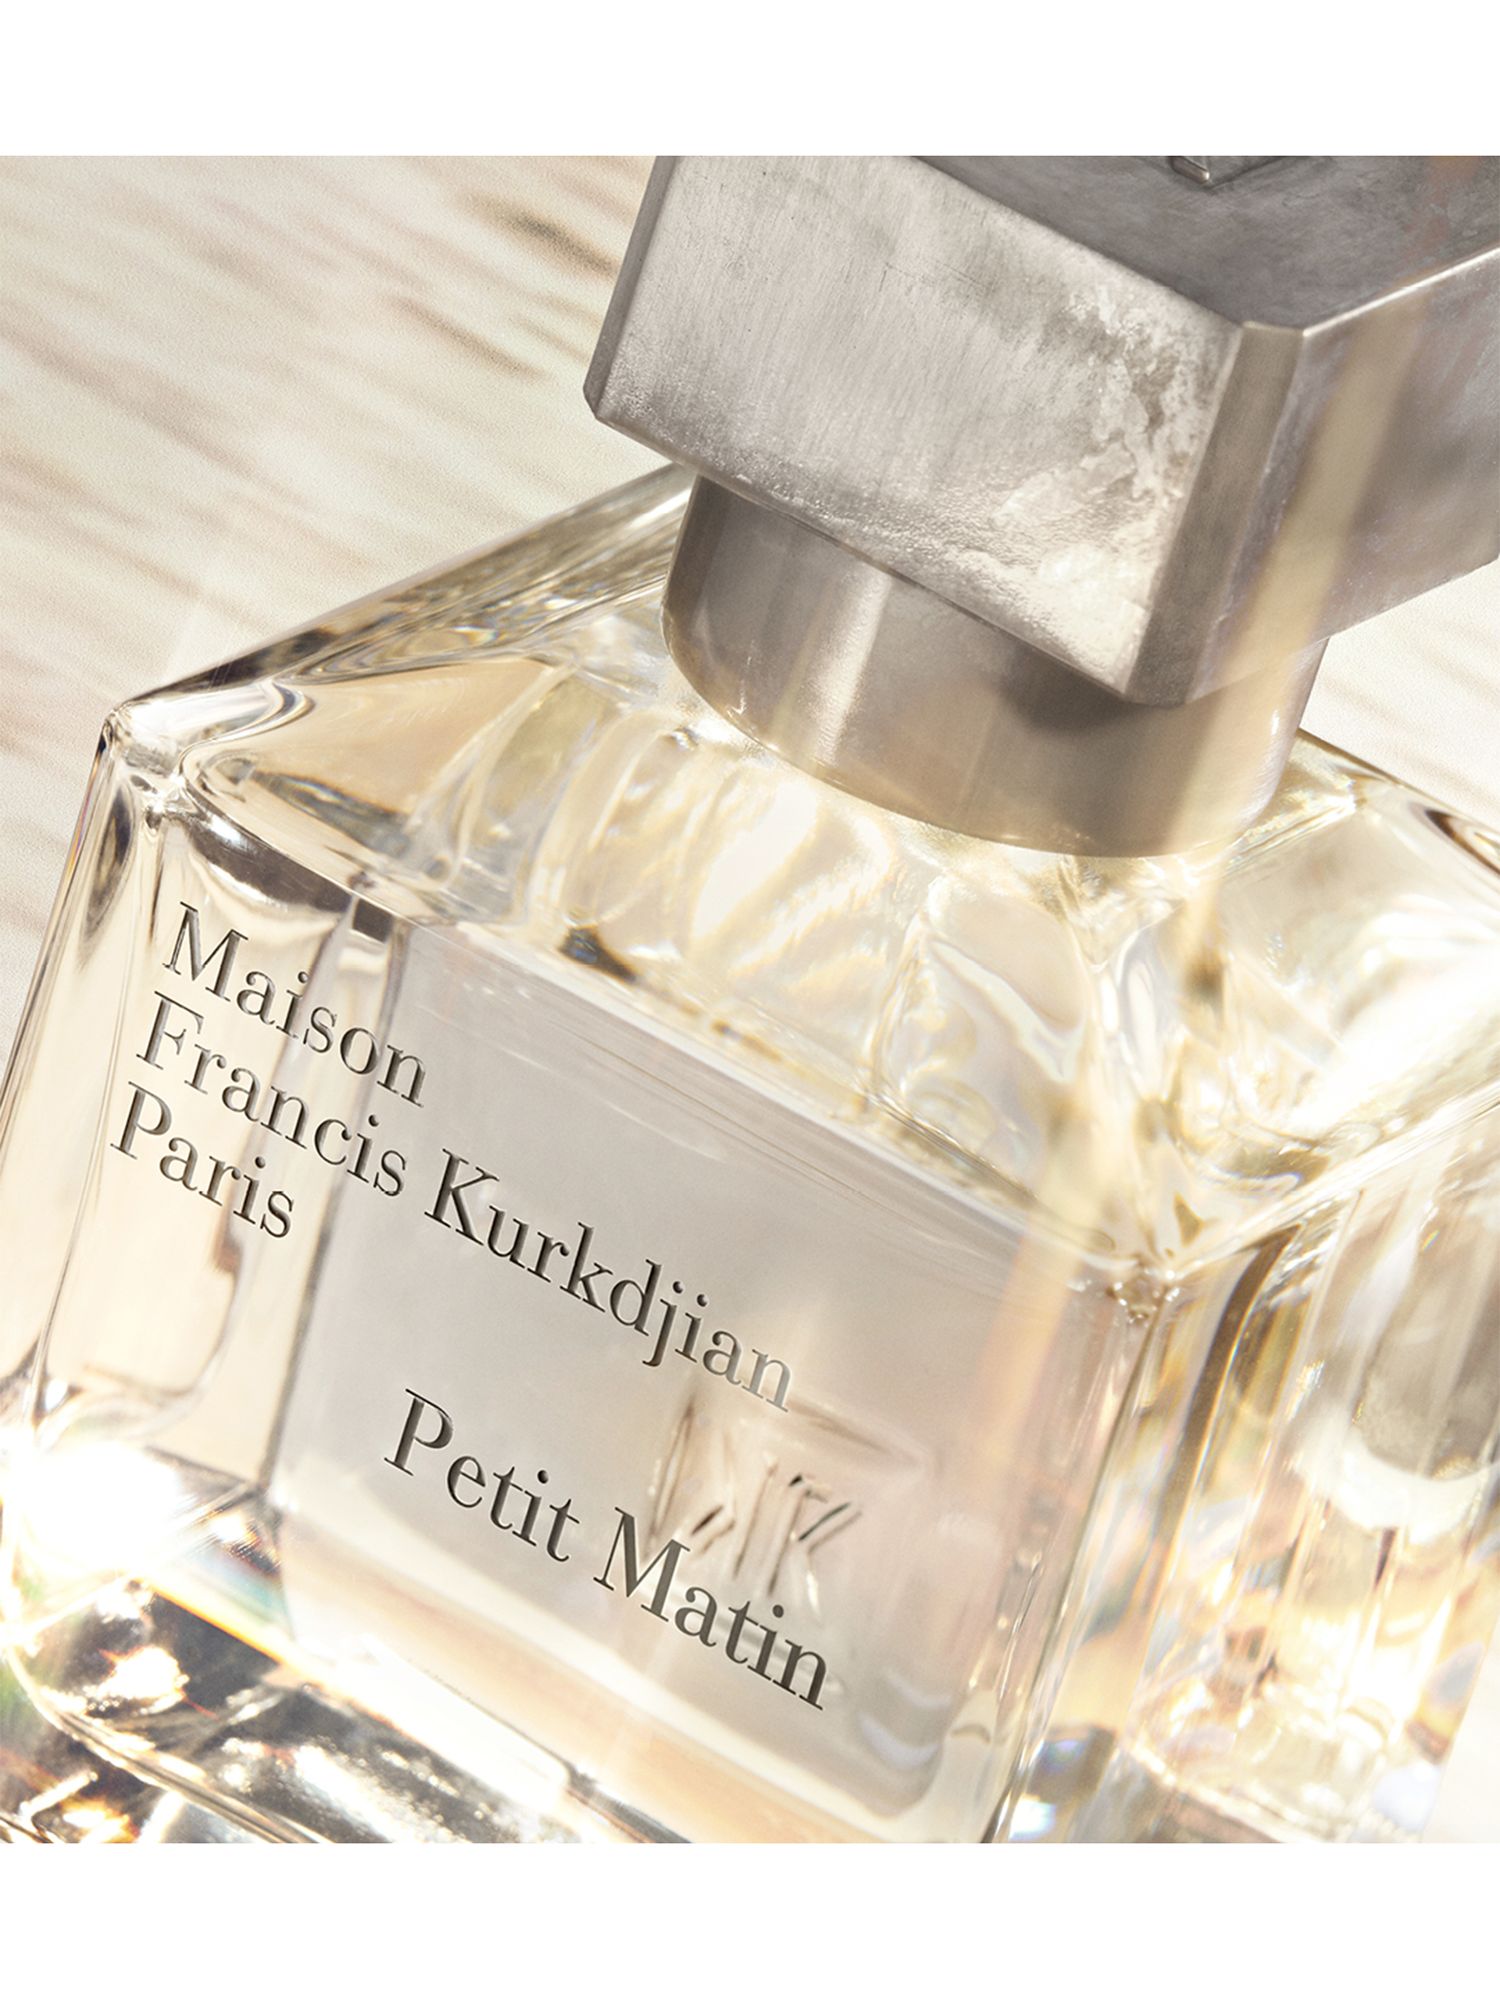 Maison Francis Kurkdjian Petit Matin Eau de Parfum, 70ml